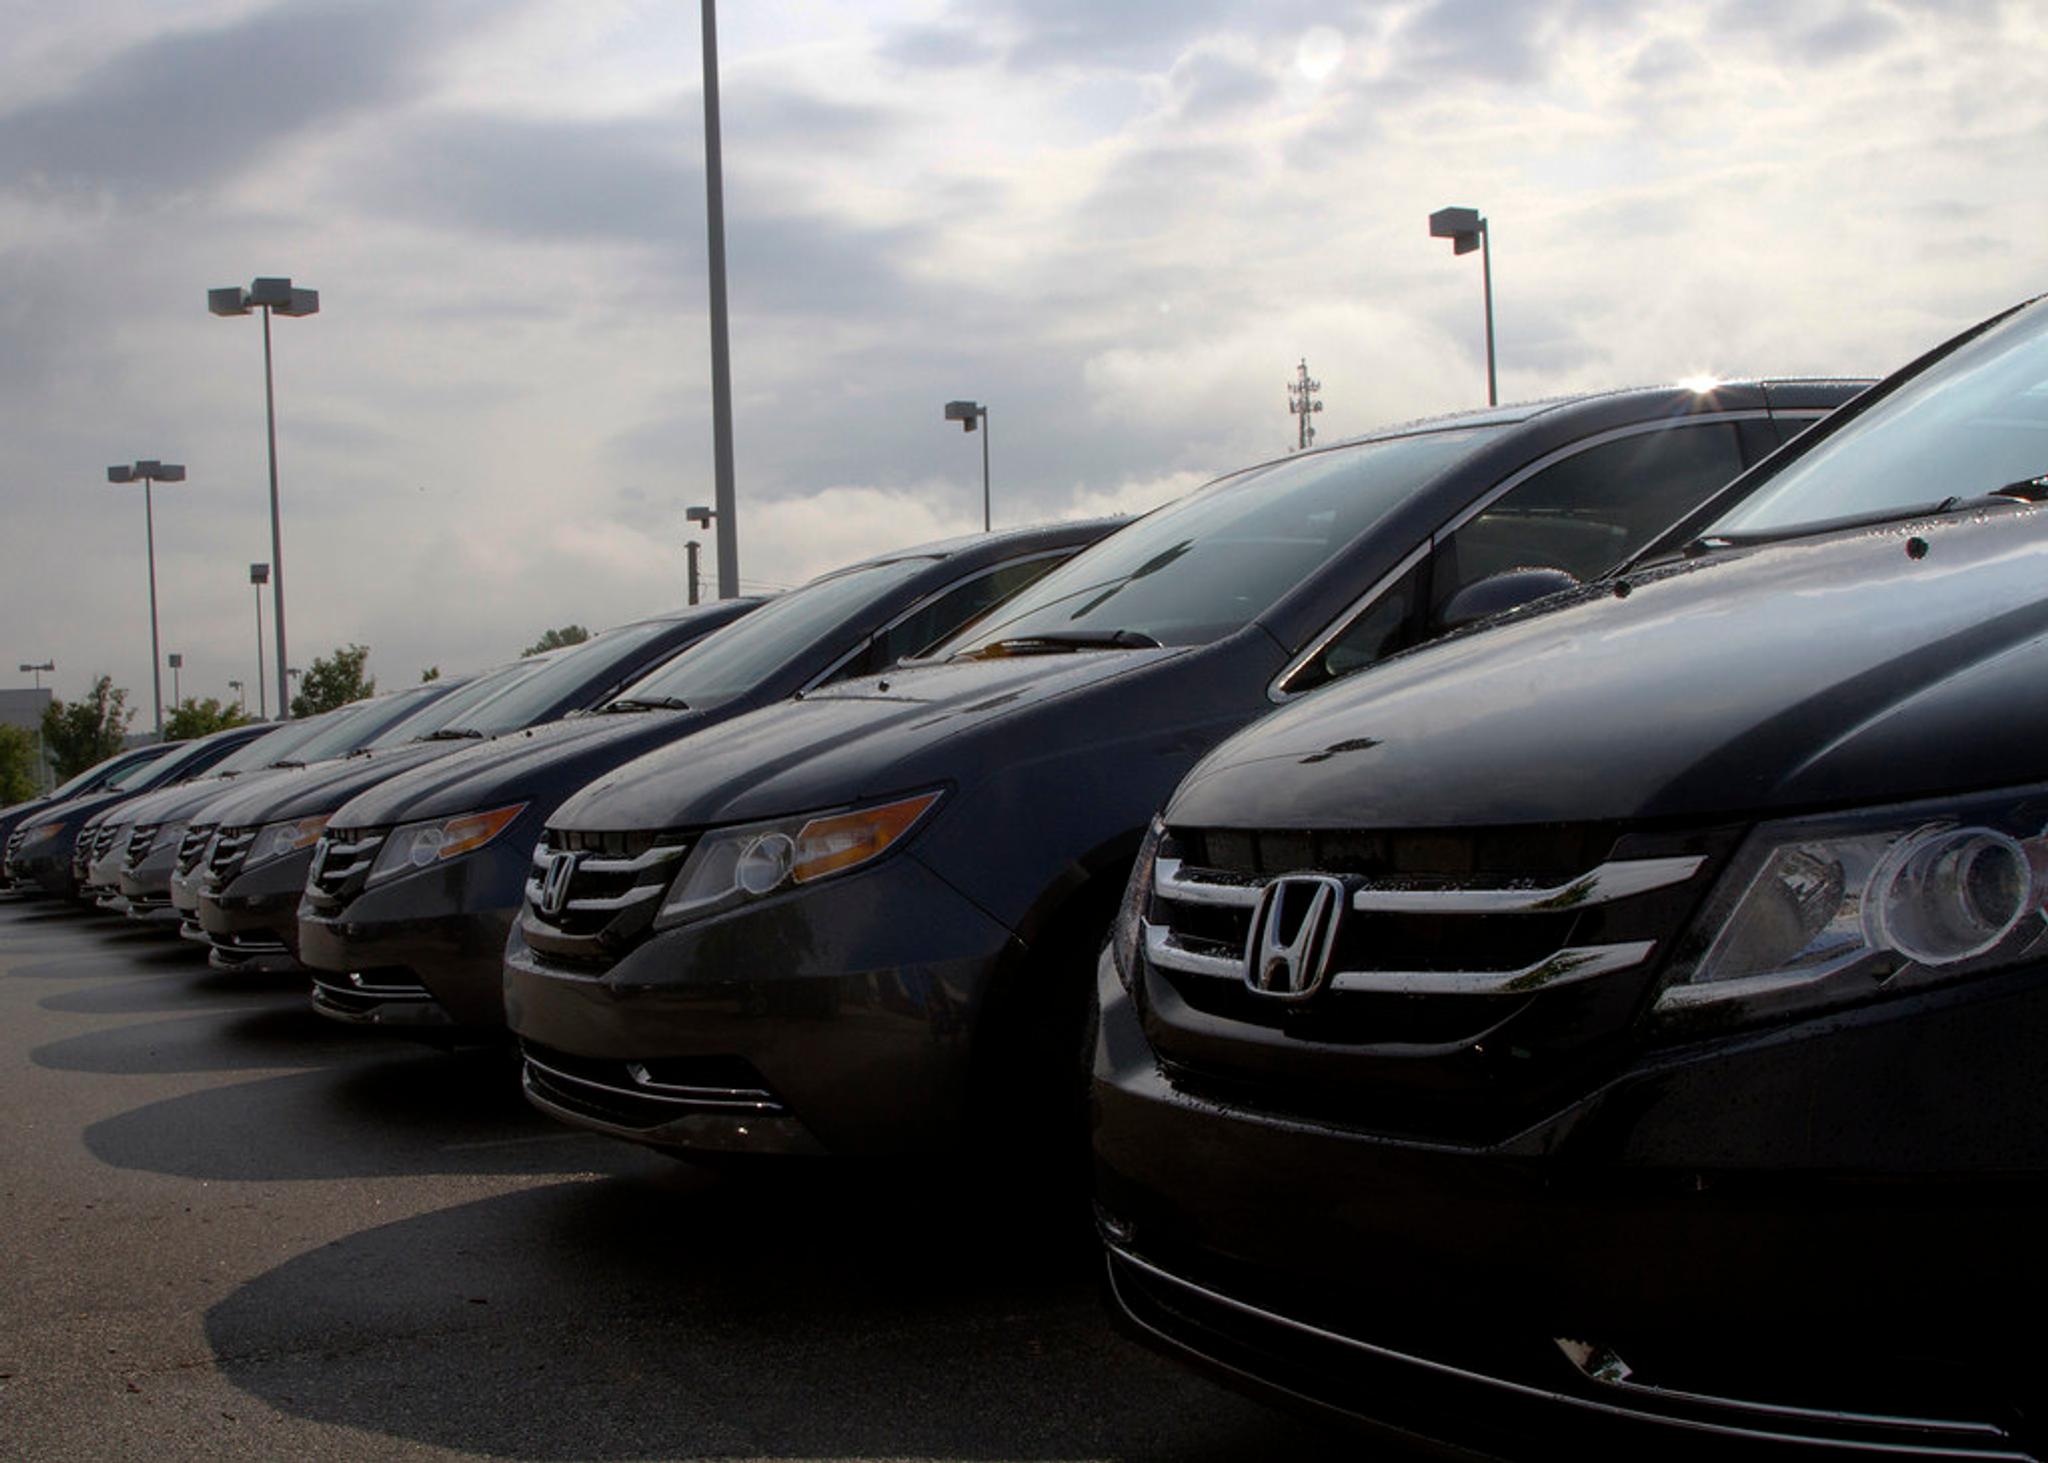 A row of Honda cars in a dealership